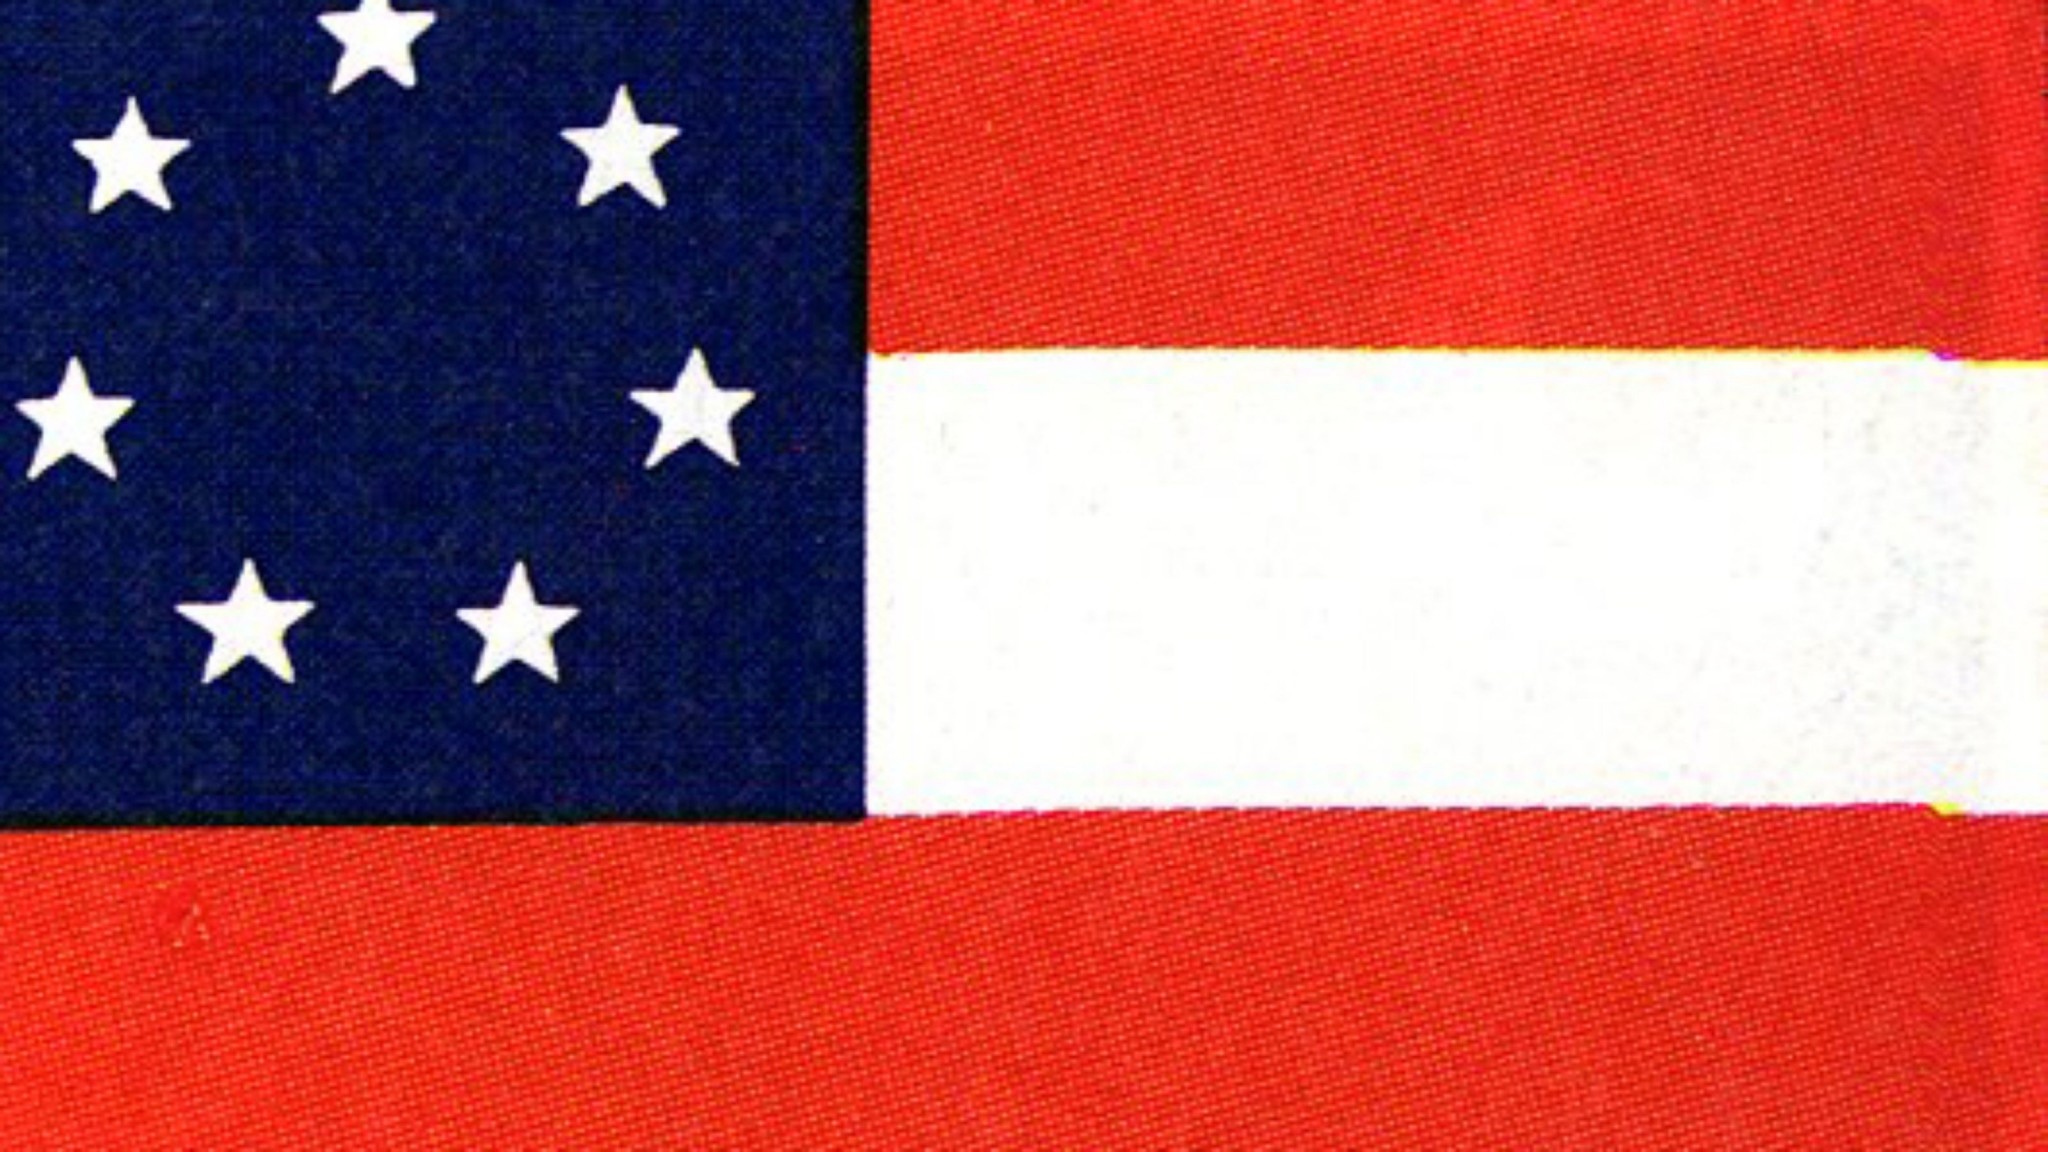 Confederate flag hd widescreen wallpapers backgrounds ololoshenka Pinterest Hd widescreen wallpapers, Widescreen wallpaper and Wallpaper backgrounds